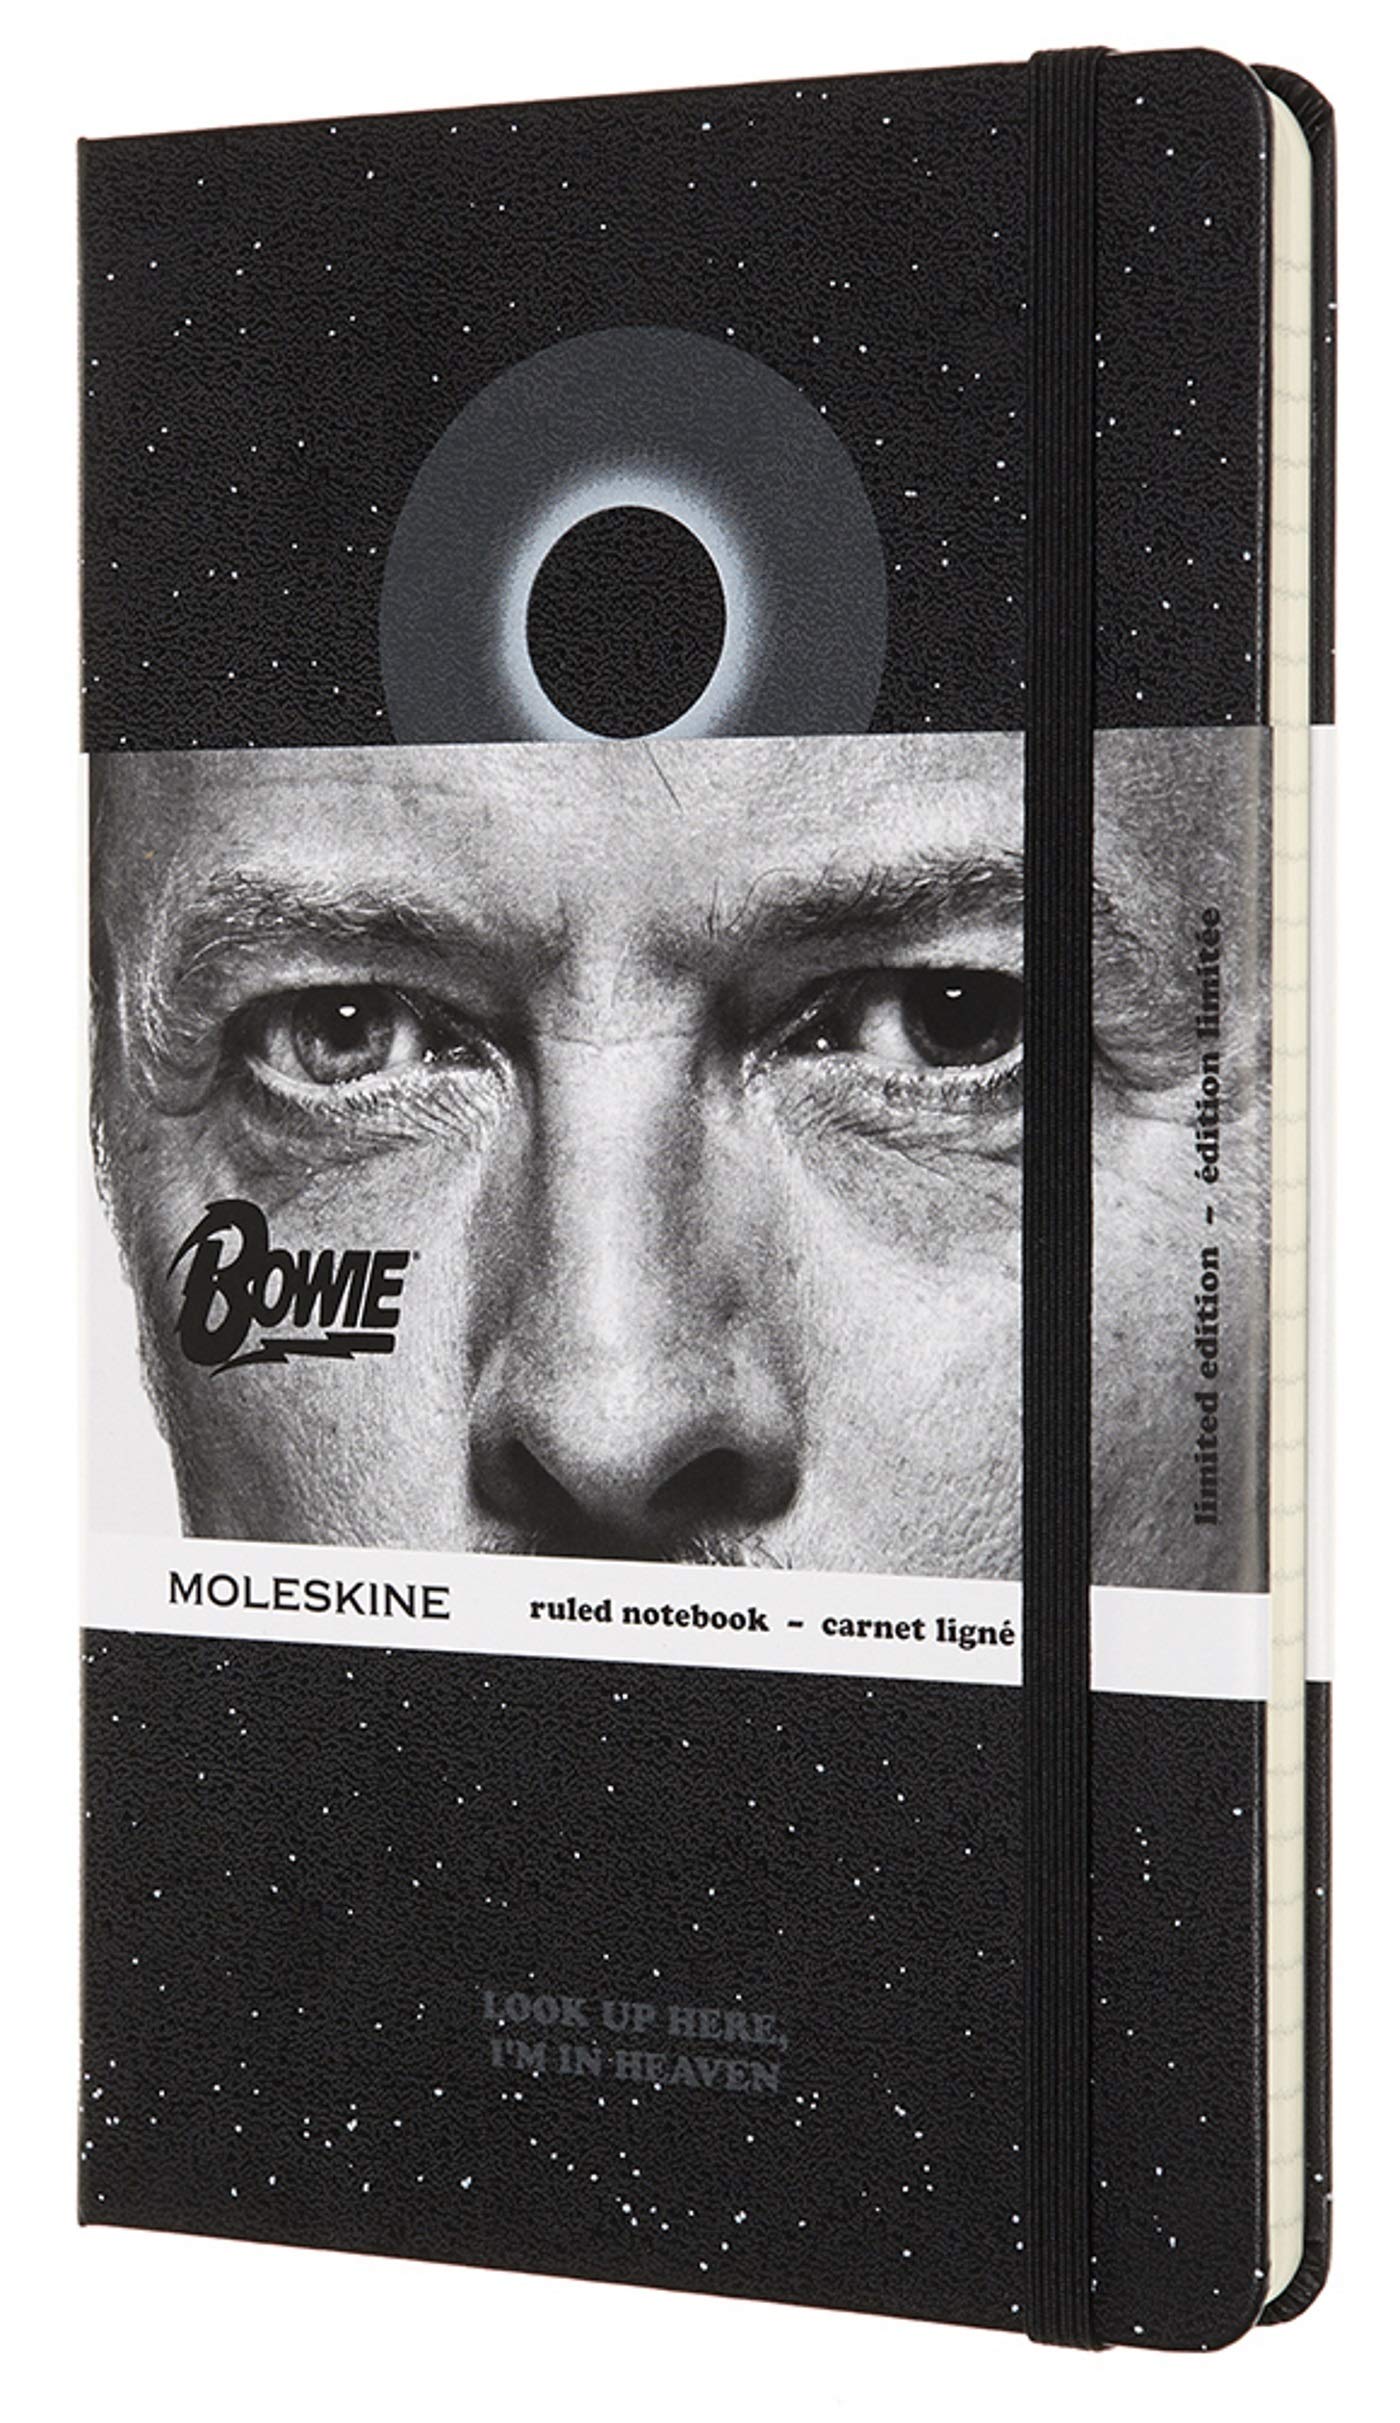 Carnet - Moleskine David Bowie Ruled Notebook - Large, Hard Cover, Black - Look Up Here, I`m In Heaven | Moleskine